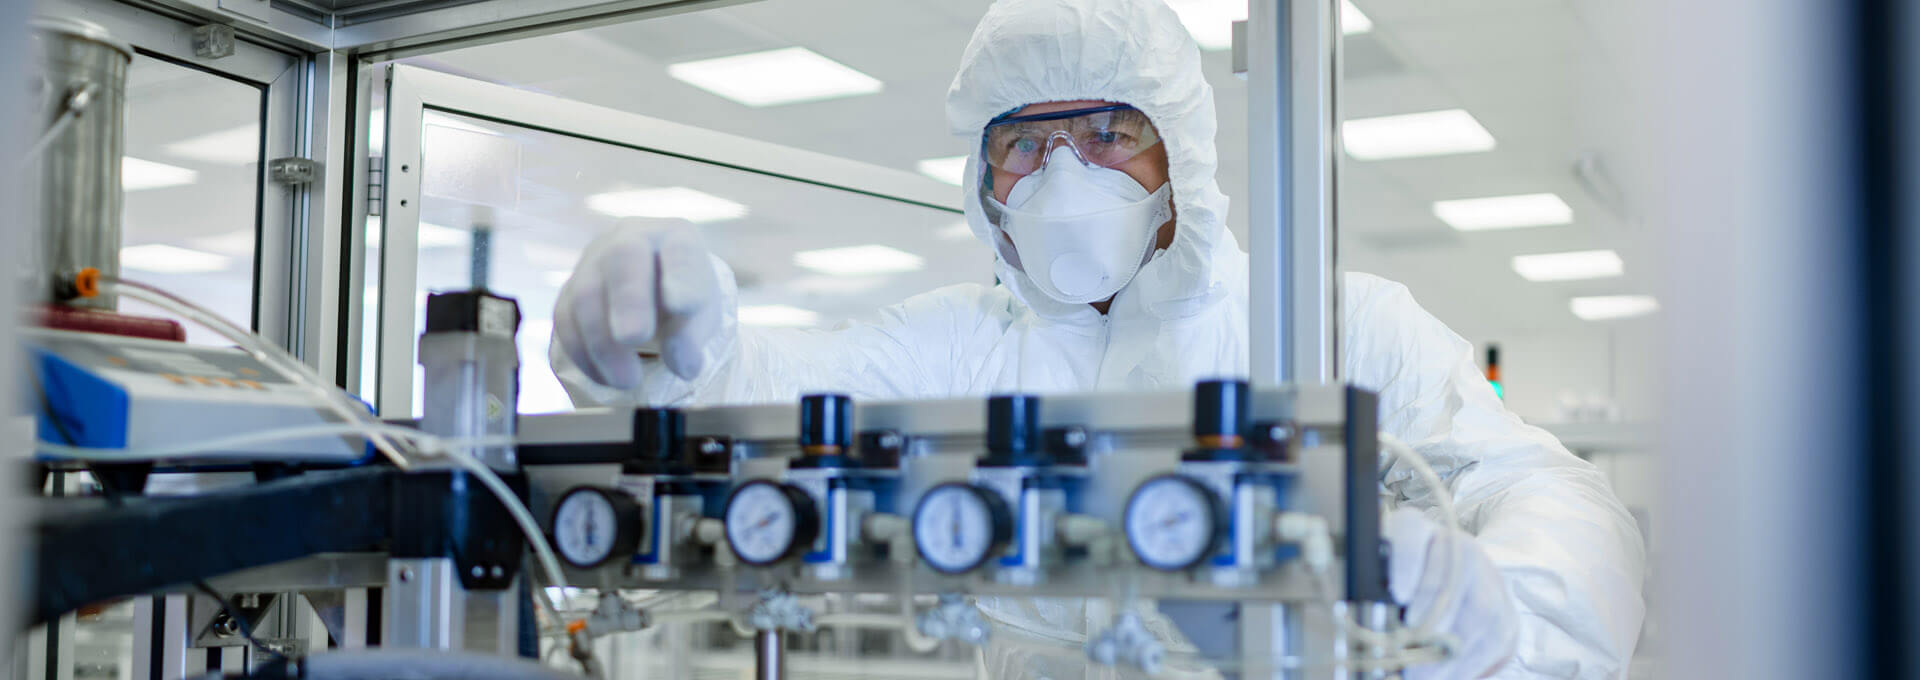 FDA Initiatives Drive 21st Century Advanced Manufacturing Technologies ...